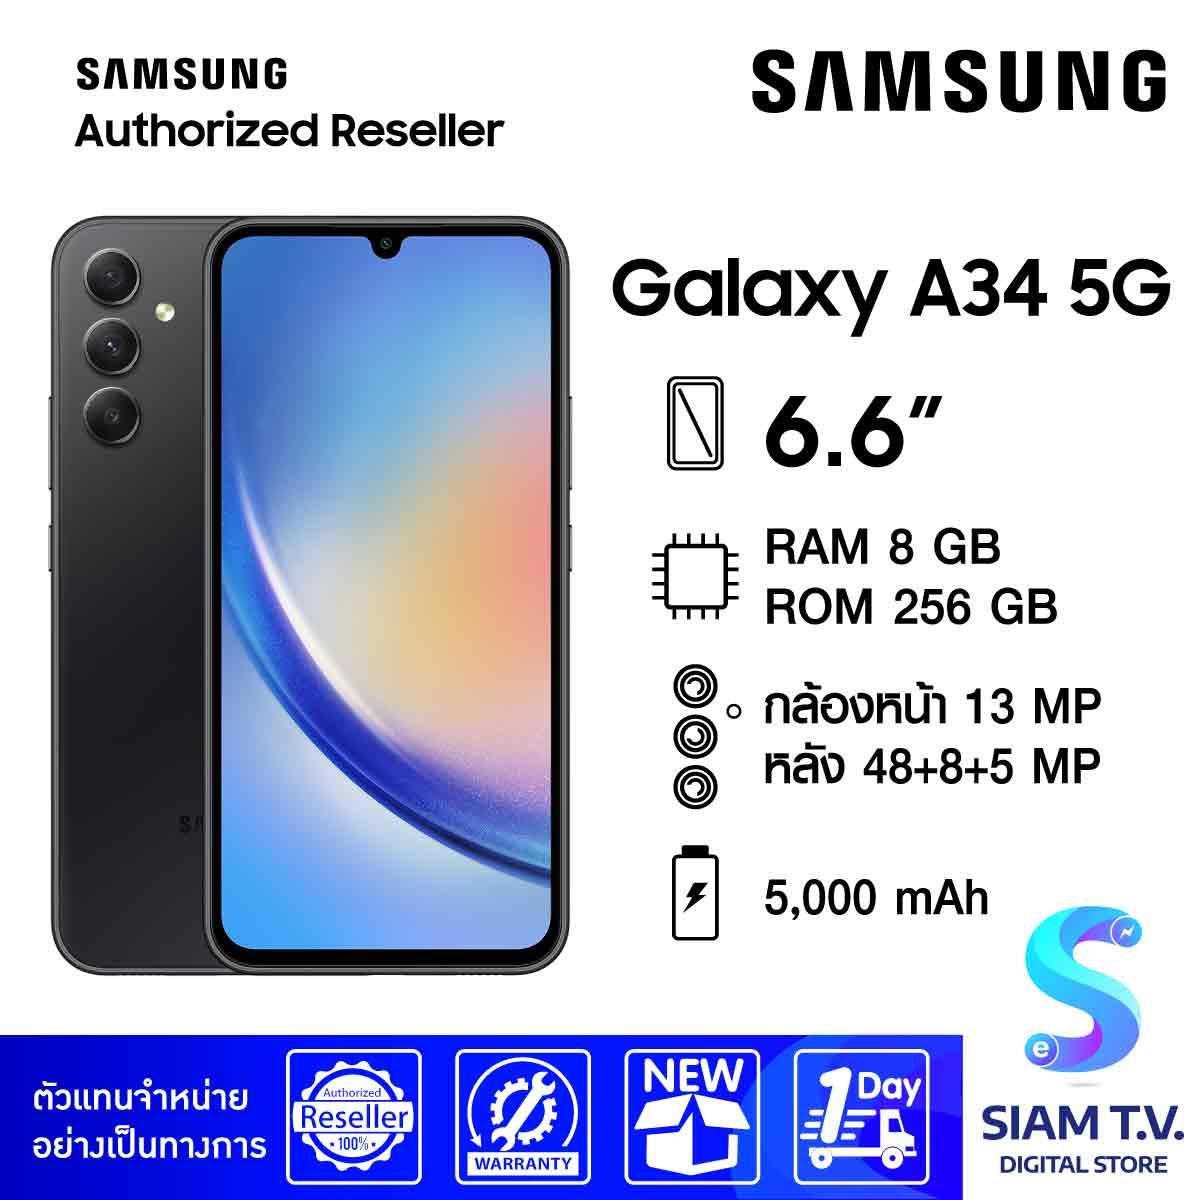 Galaxy A34 5G  (Ram 8 GB , Rom 256 GB) 6.6 "